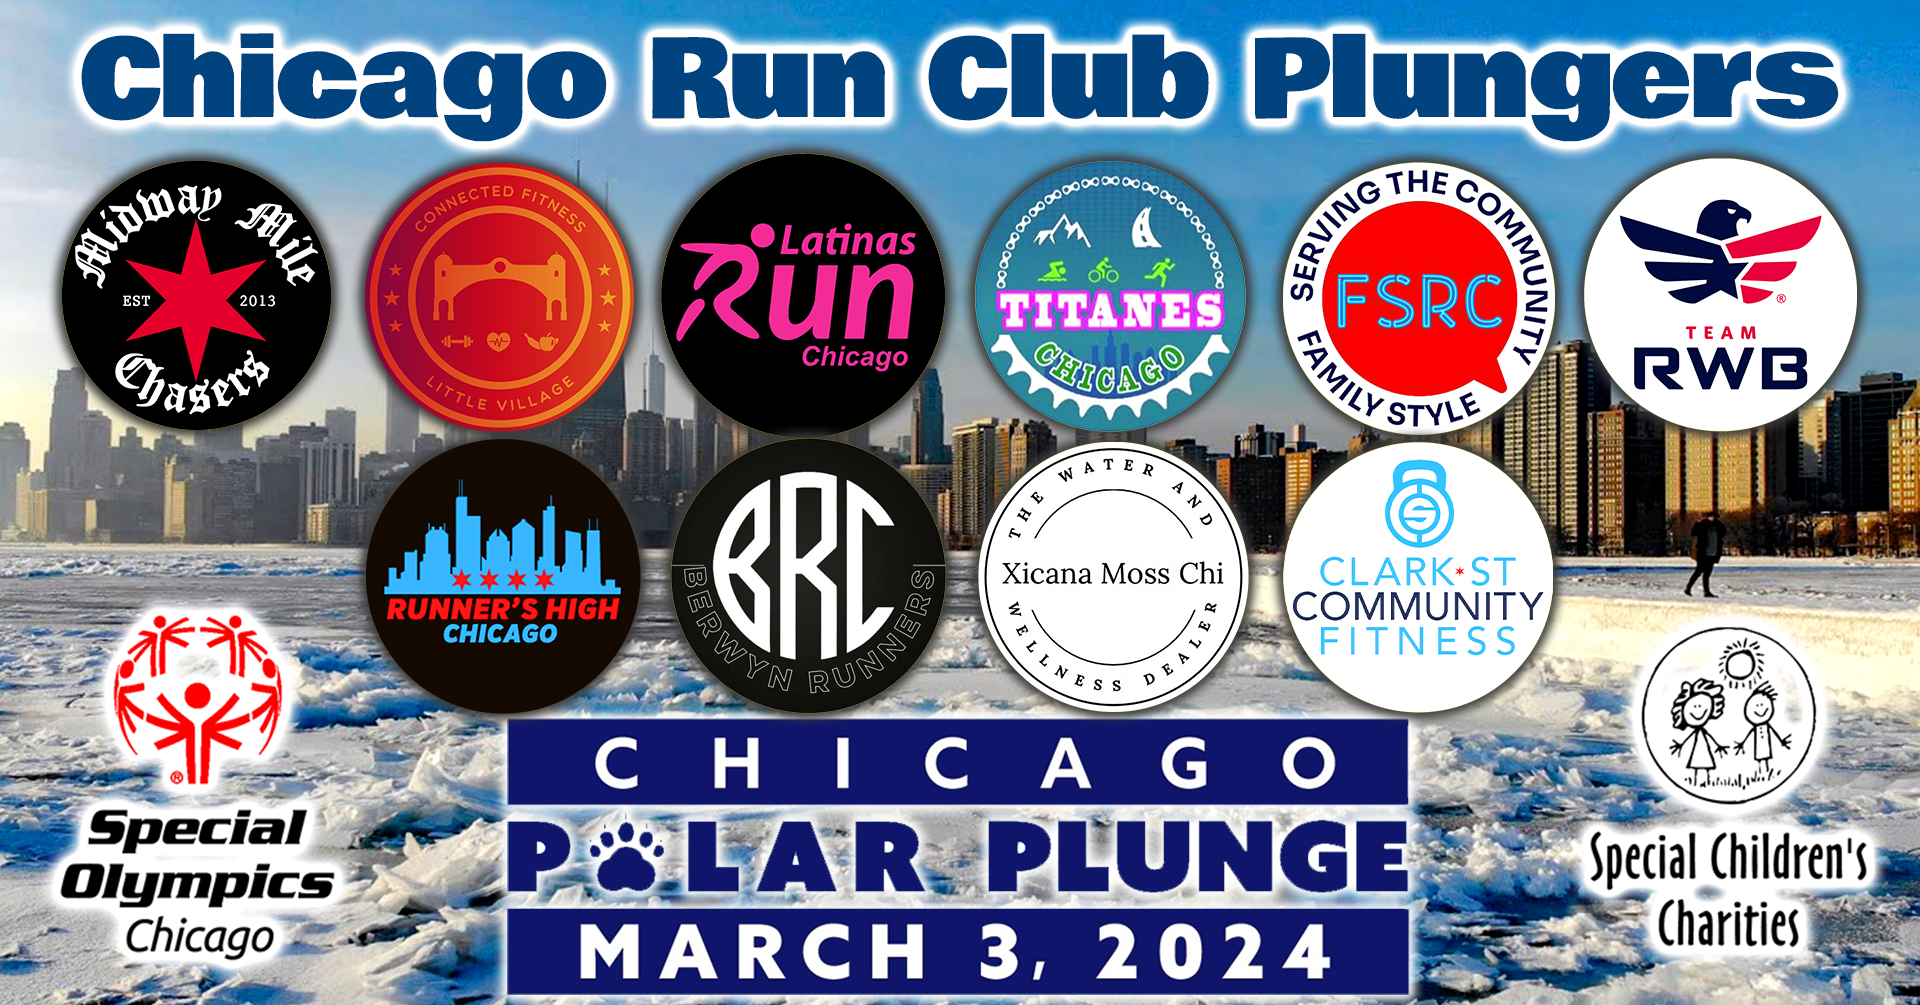 Run Clubs participating